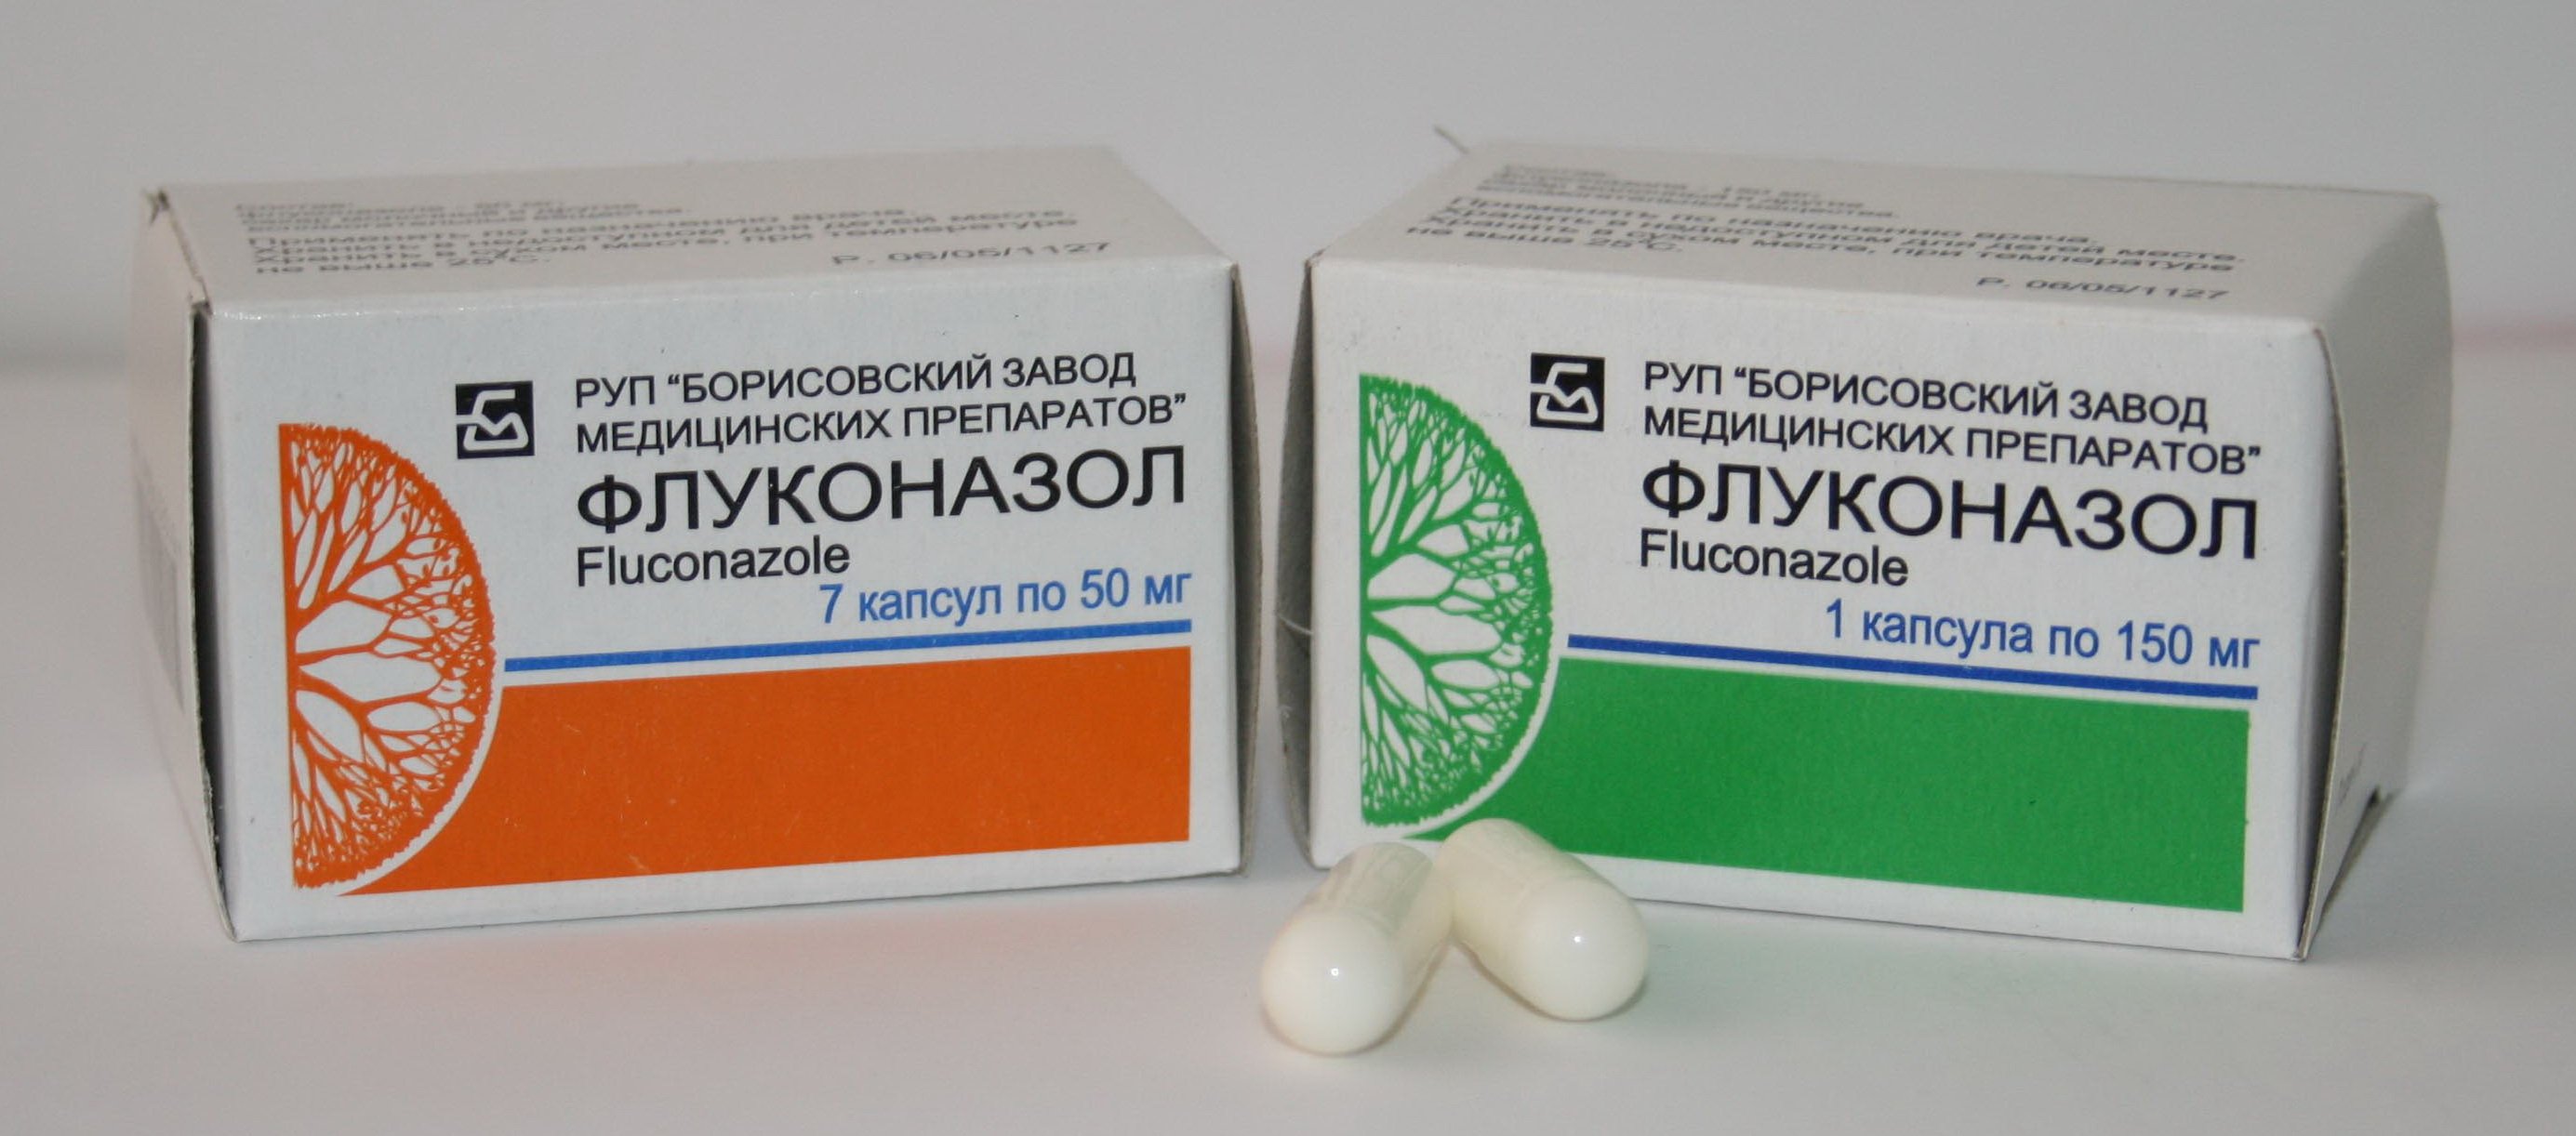 Таблетки Флуконазол: инструкция по применению, состав, аналоги противогрибкового препарата